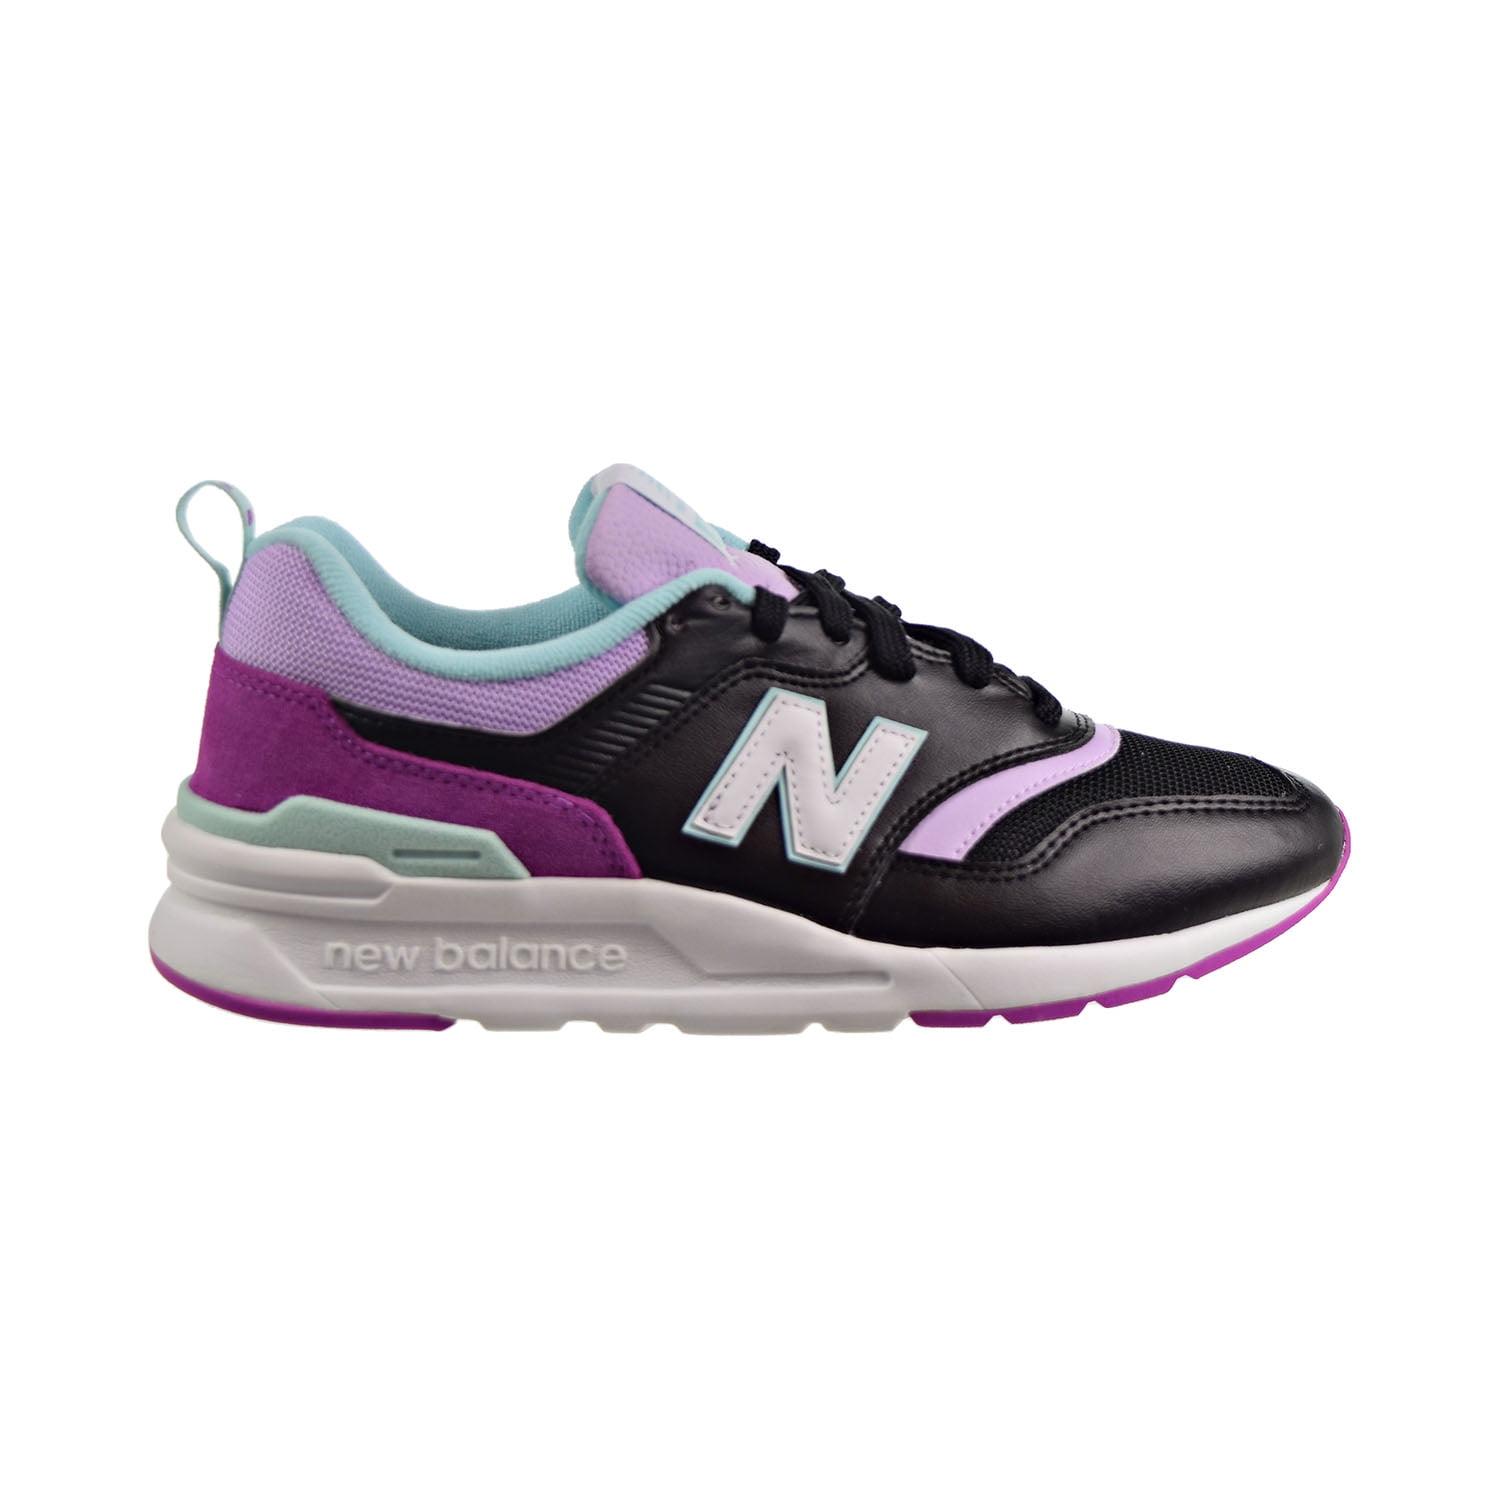 New Balance 997H Women's Shoes Purple-Black cw997-hmc - Walmart.com